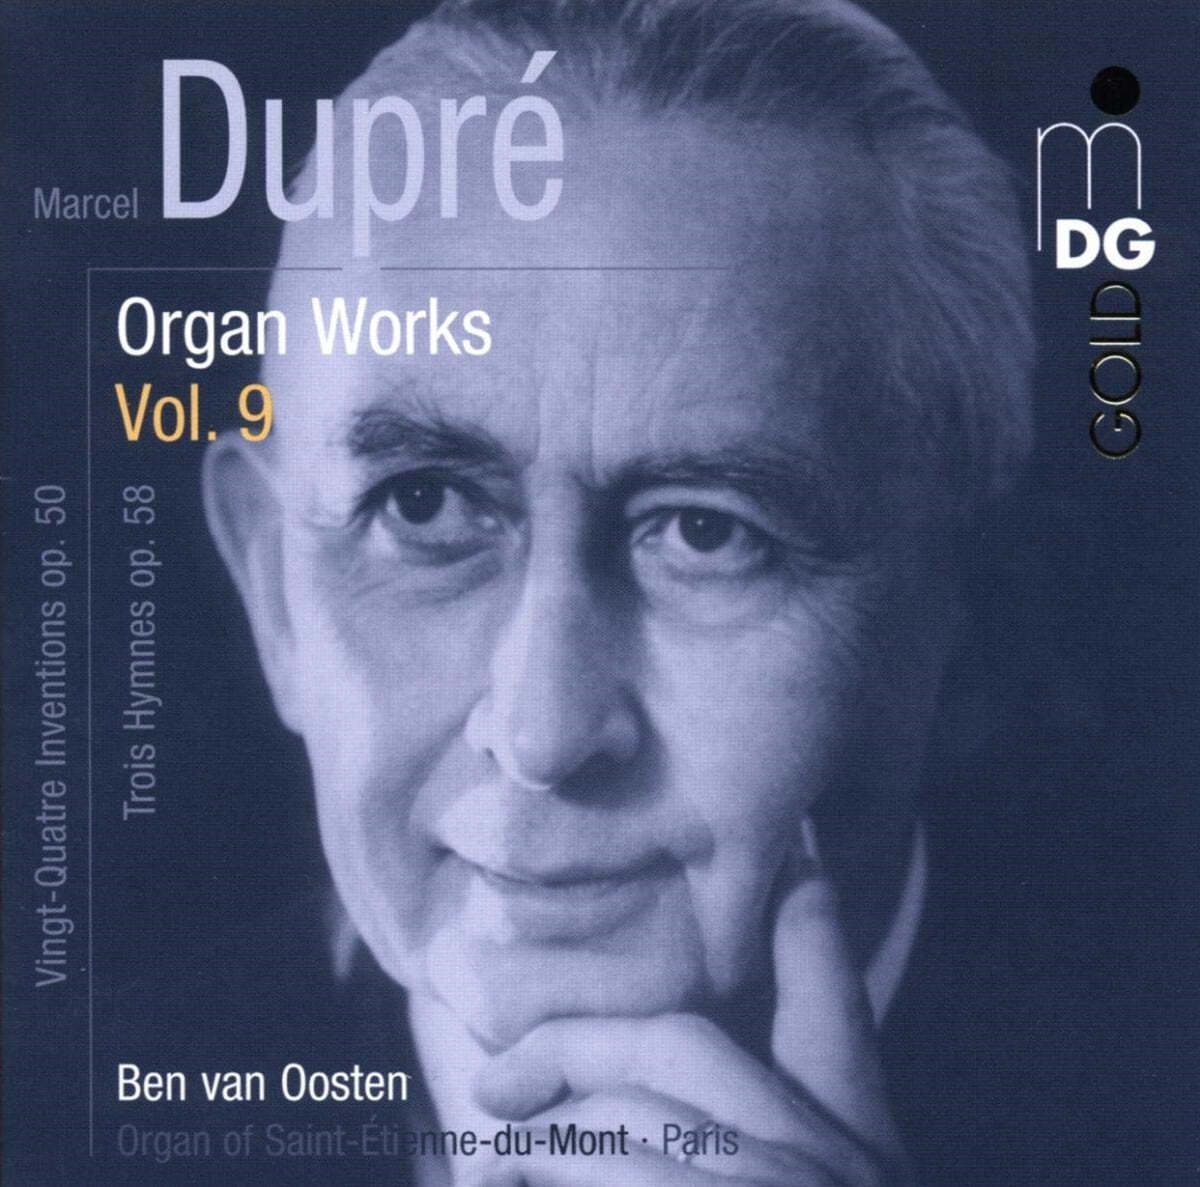 Ben van Oosten 마르셀 뒤프레: 오르간 작품집 9집 (Marcel Dupre: Organ Works Vol. 9) 